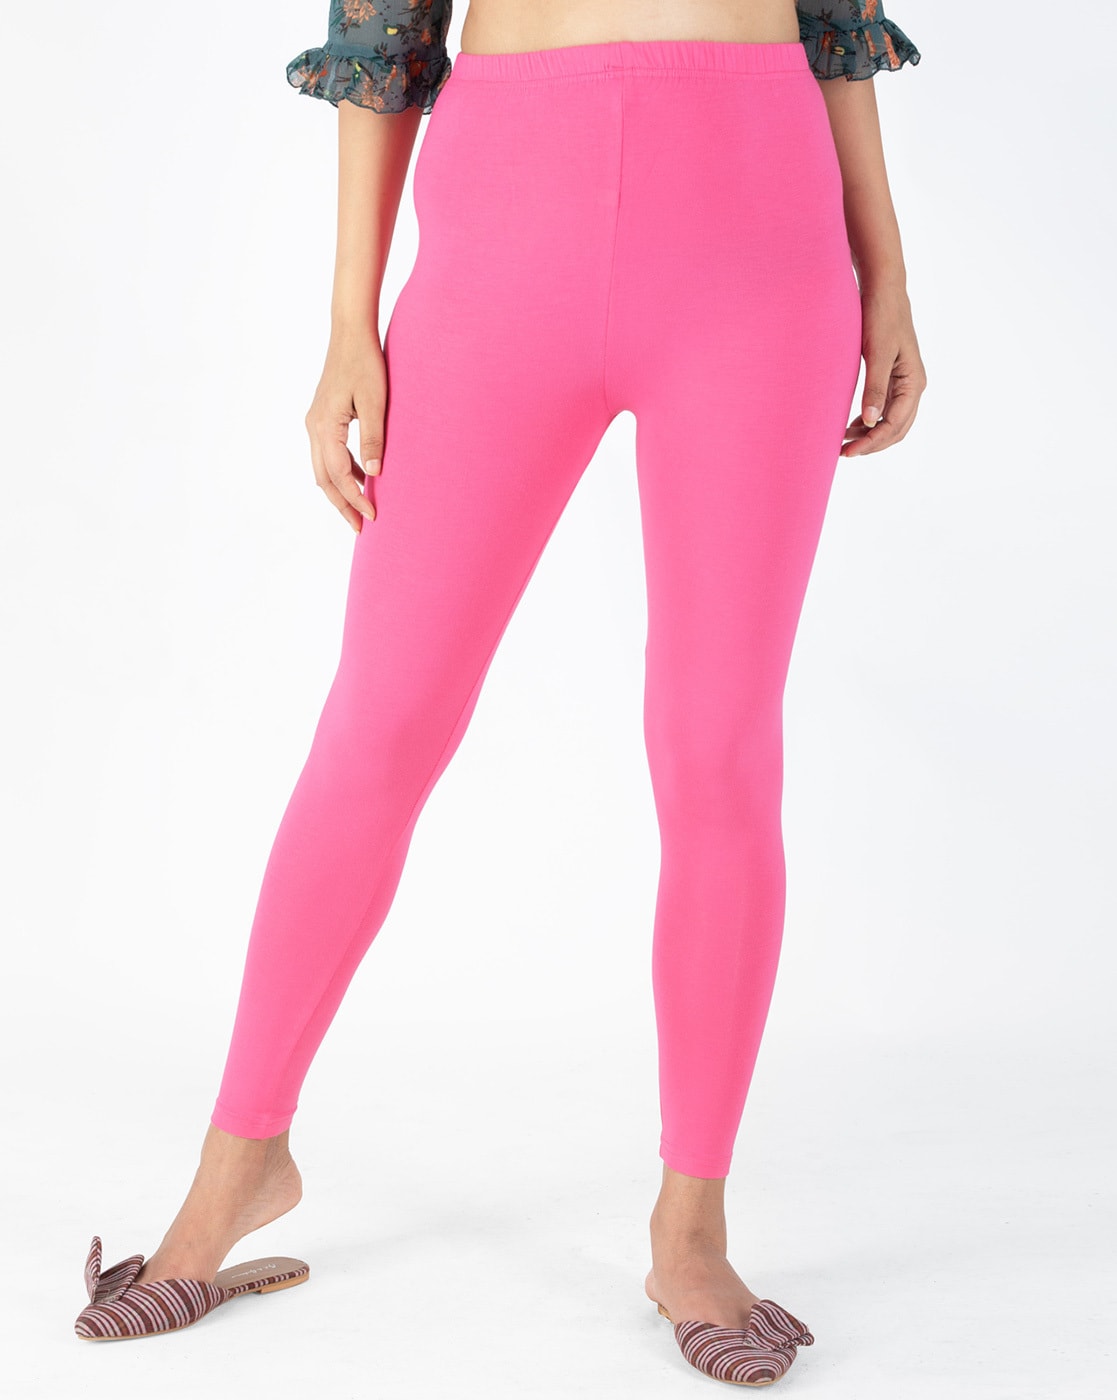 Buy Pink Leggings for Women by INDIAN FLOWER Online